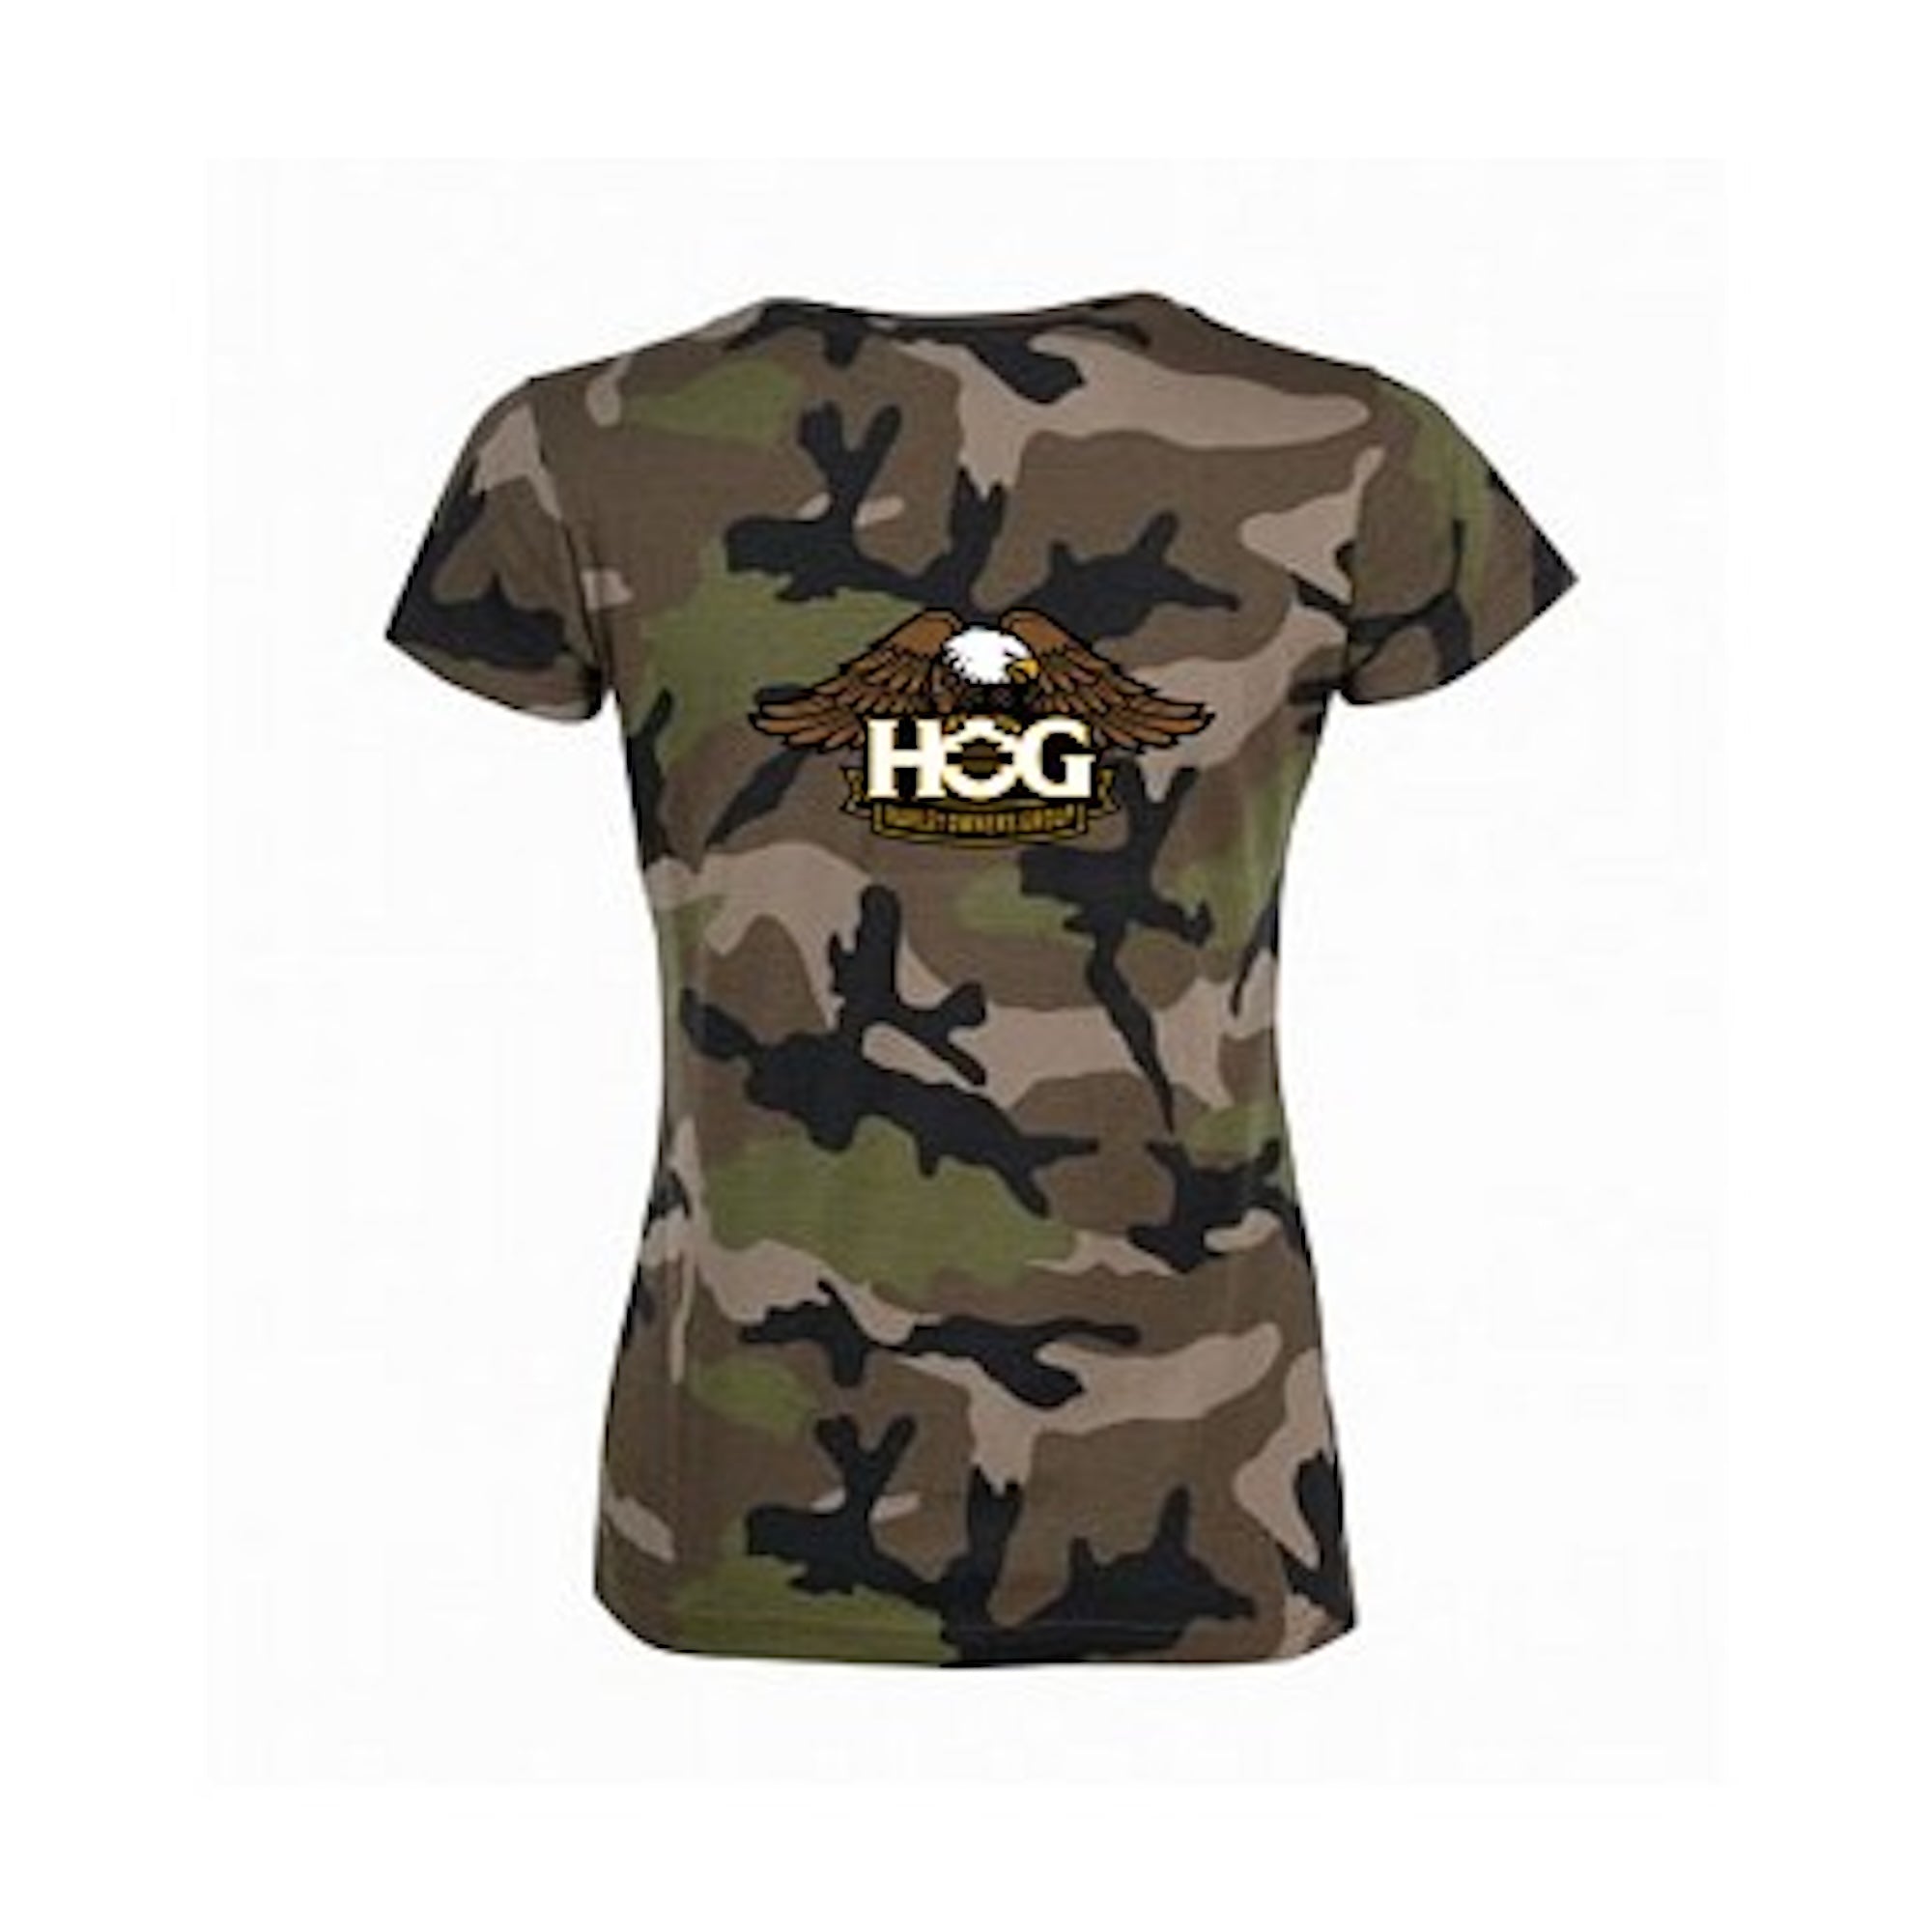 H.O.G. Camo Ladies T-Shirt